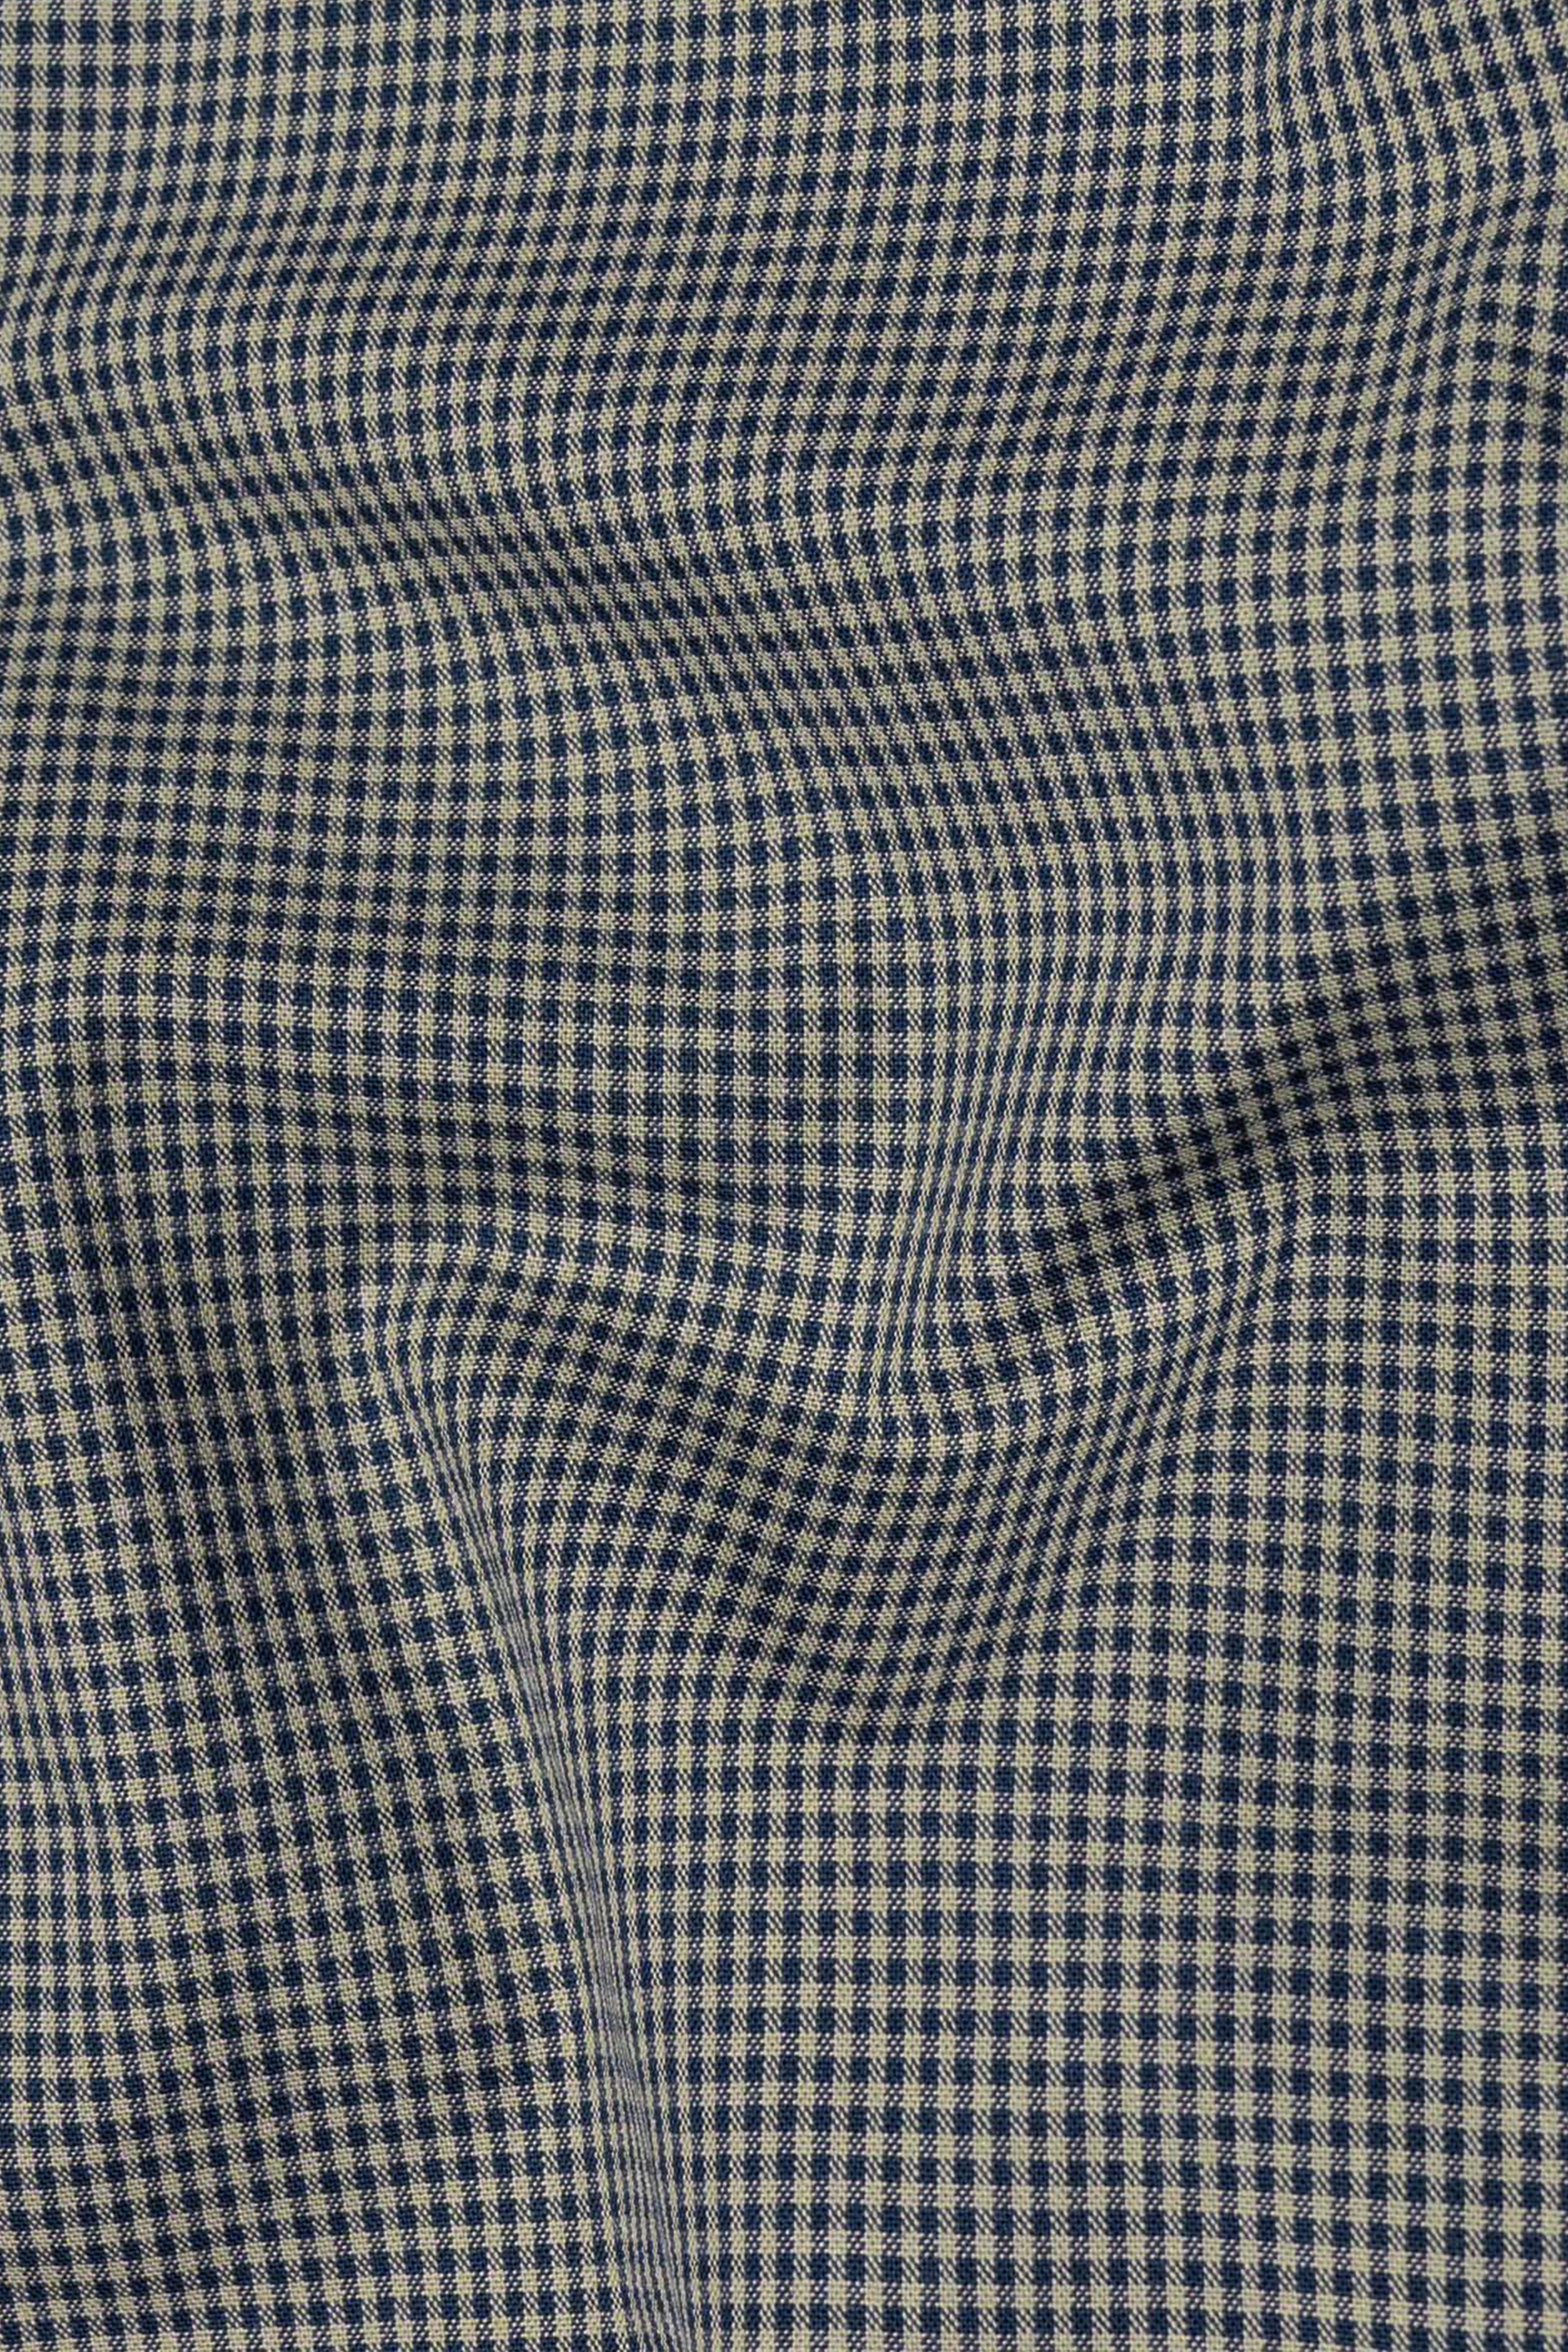 Cinereous and Dusk Blue Checkered Royal Oxford Shirt